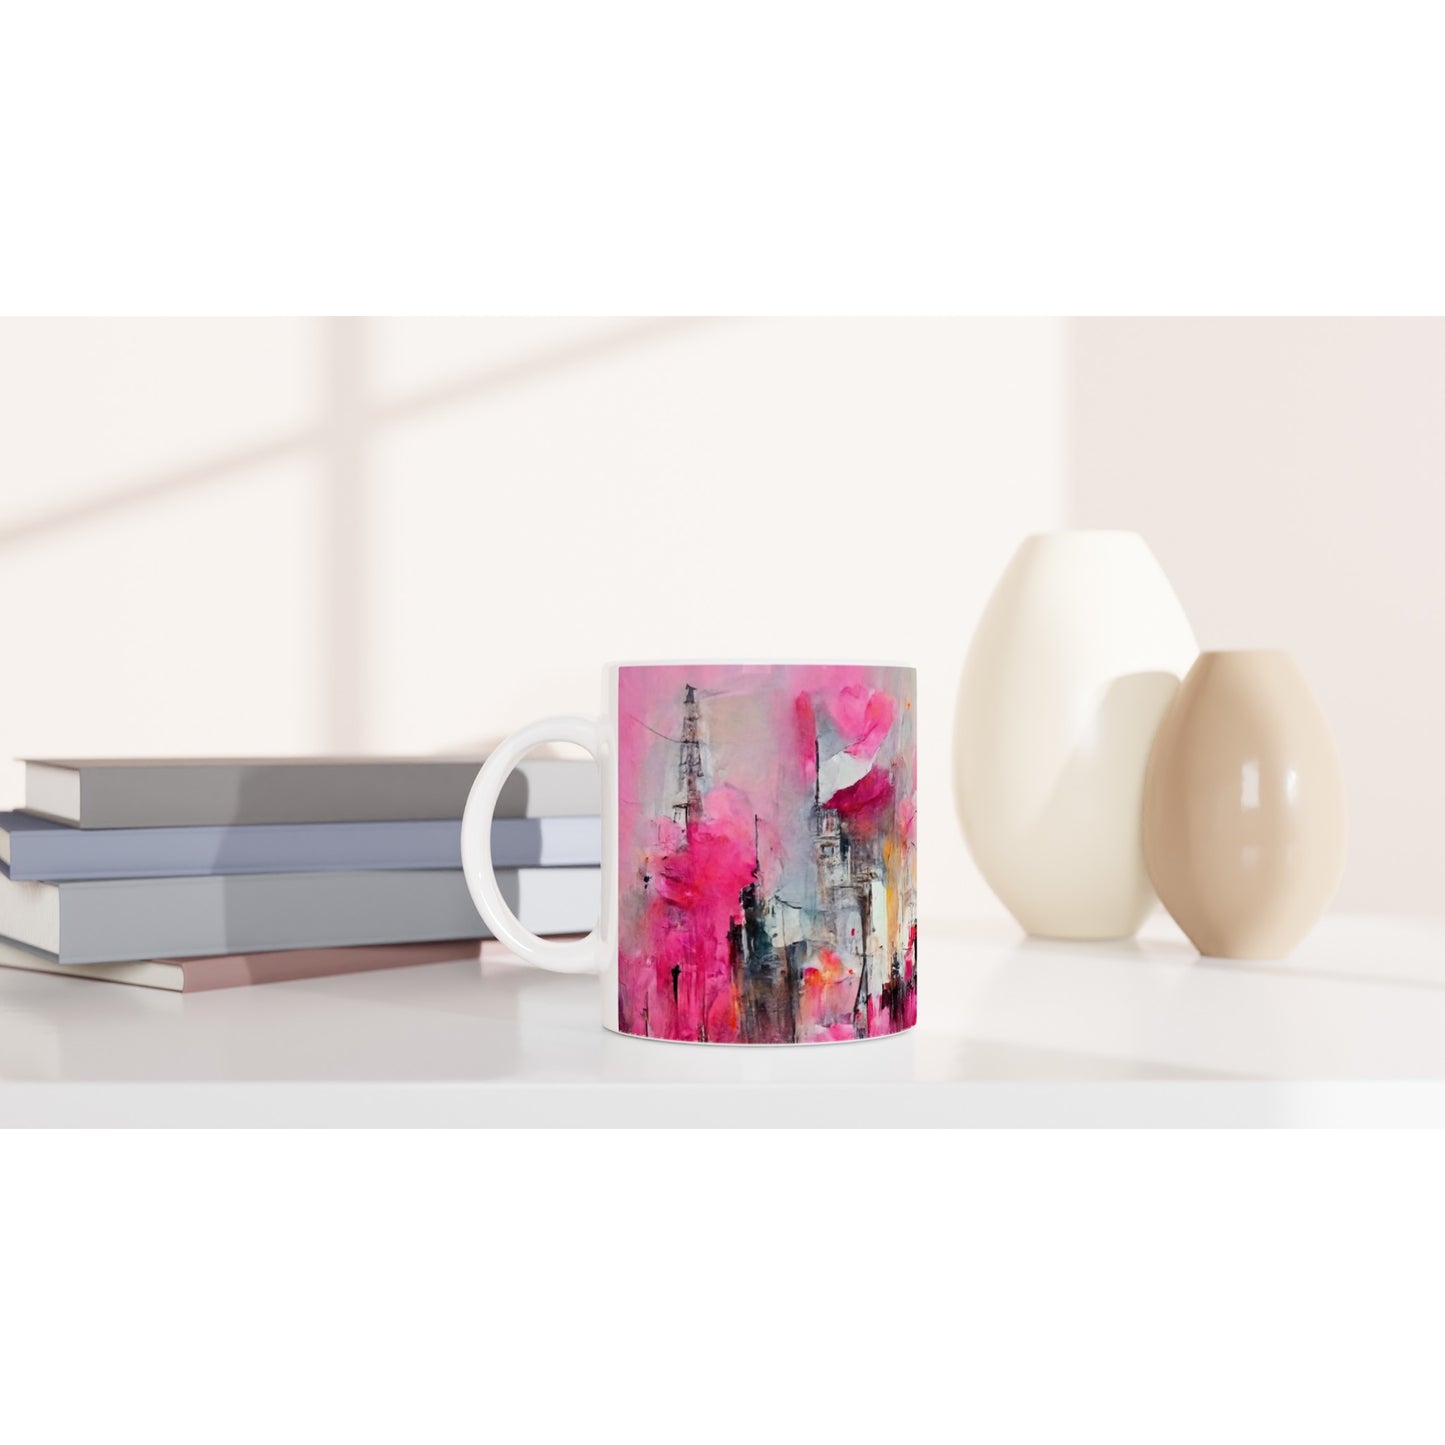 Sammeltasse (bedruckt) - in Museumsqualität - Spring in Paris - France - ölgemälde - Place de la Concorde - Posterleisten - Champs Elysee - Fineart - Posterrahmen  - Wandkunst - Holzrahmen - Poster with frame - Abstract Pink - artwork - art brand - printed cup personalized - Holzleisten - pixelboys - Kunstdrucke - wandbilder - wall art - Kunst auf Tassen  - Office Poster - Gastrotassen - Wanddekoration - Acrylkunst - Geschenkidee - Office Poster - Acryldruck - Abstrakte Kunst - Pink Art -